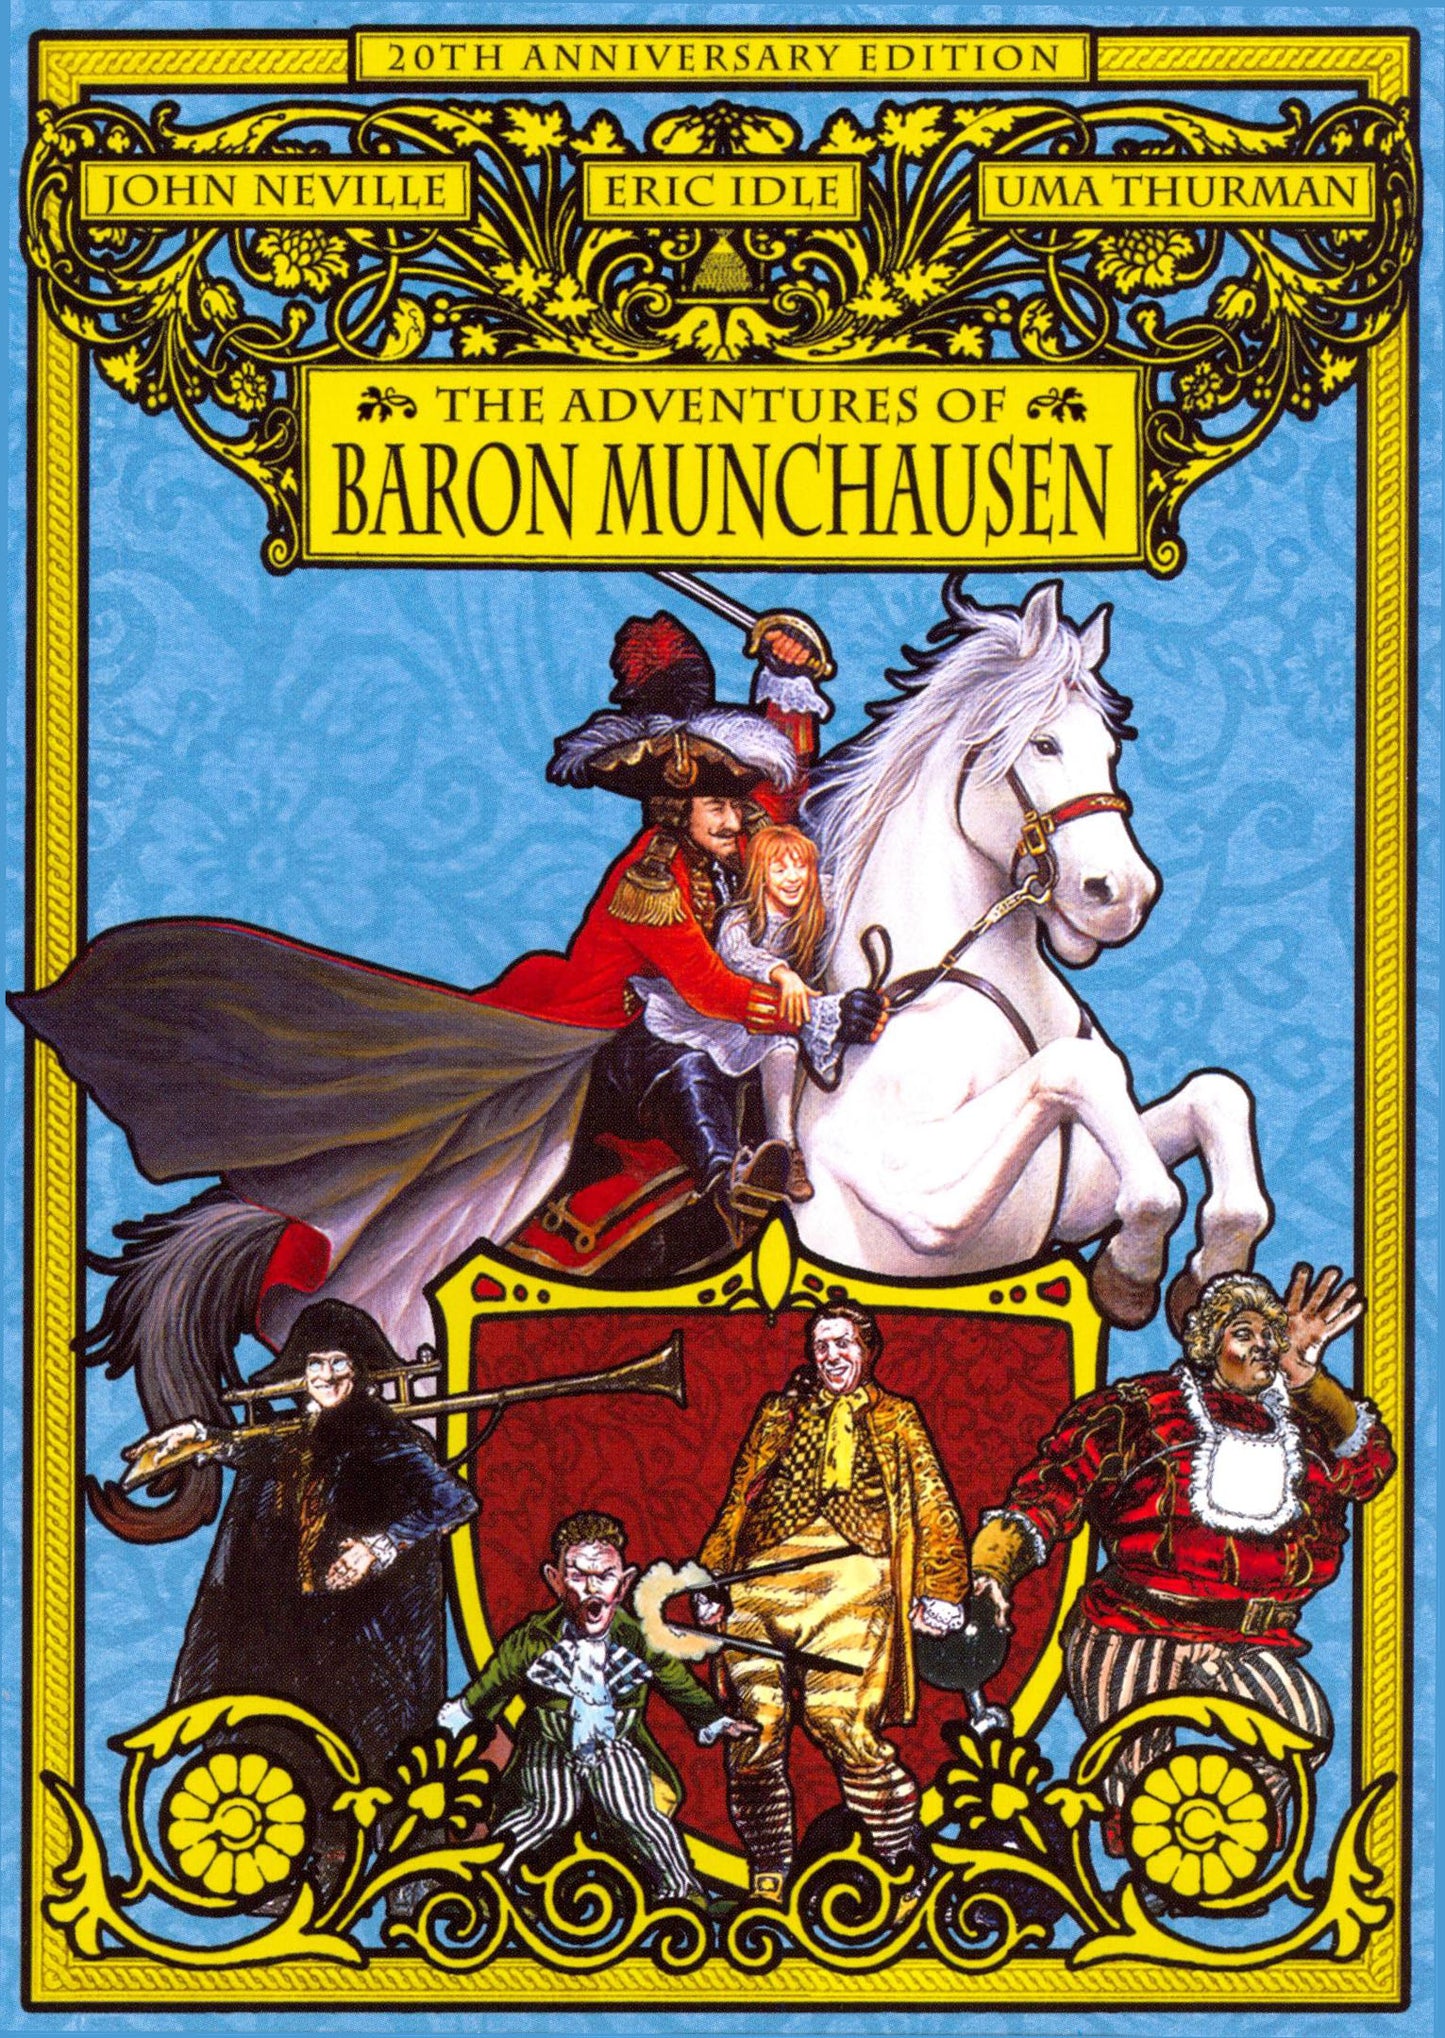 Adventures of Baron Munchausen [20th Anniversary Edition] [2Discs] cover art